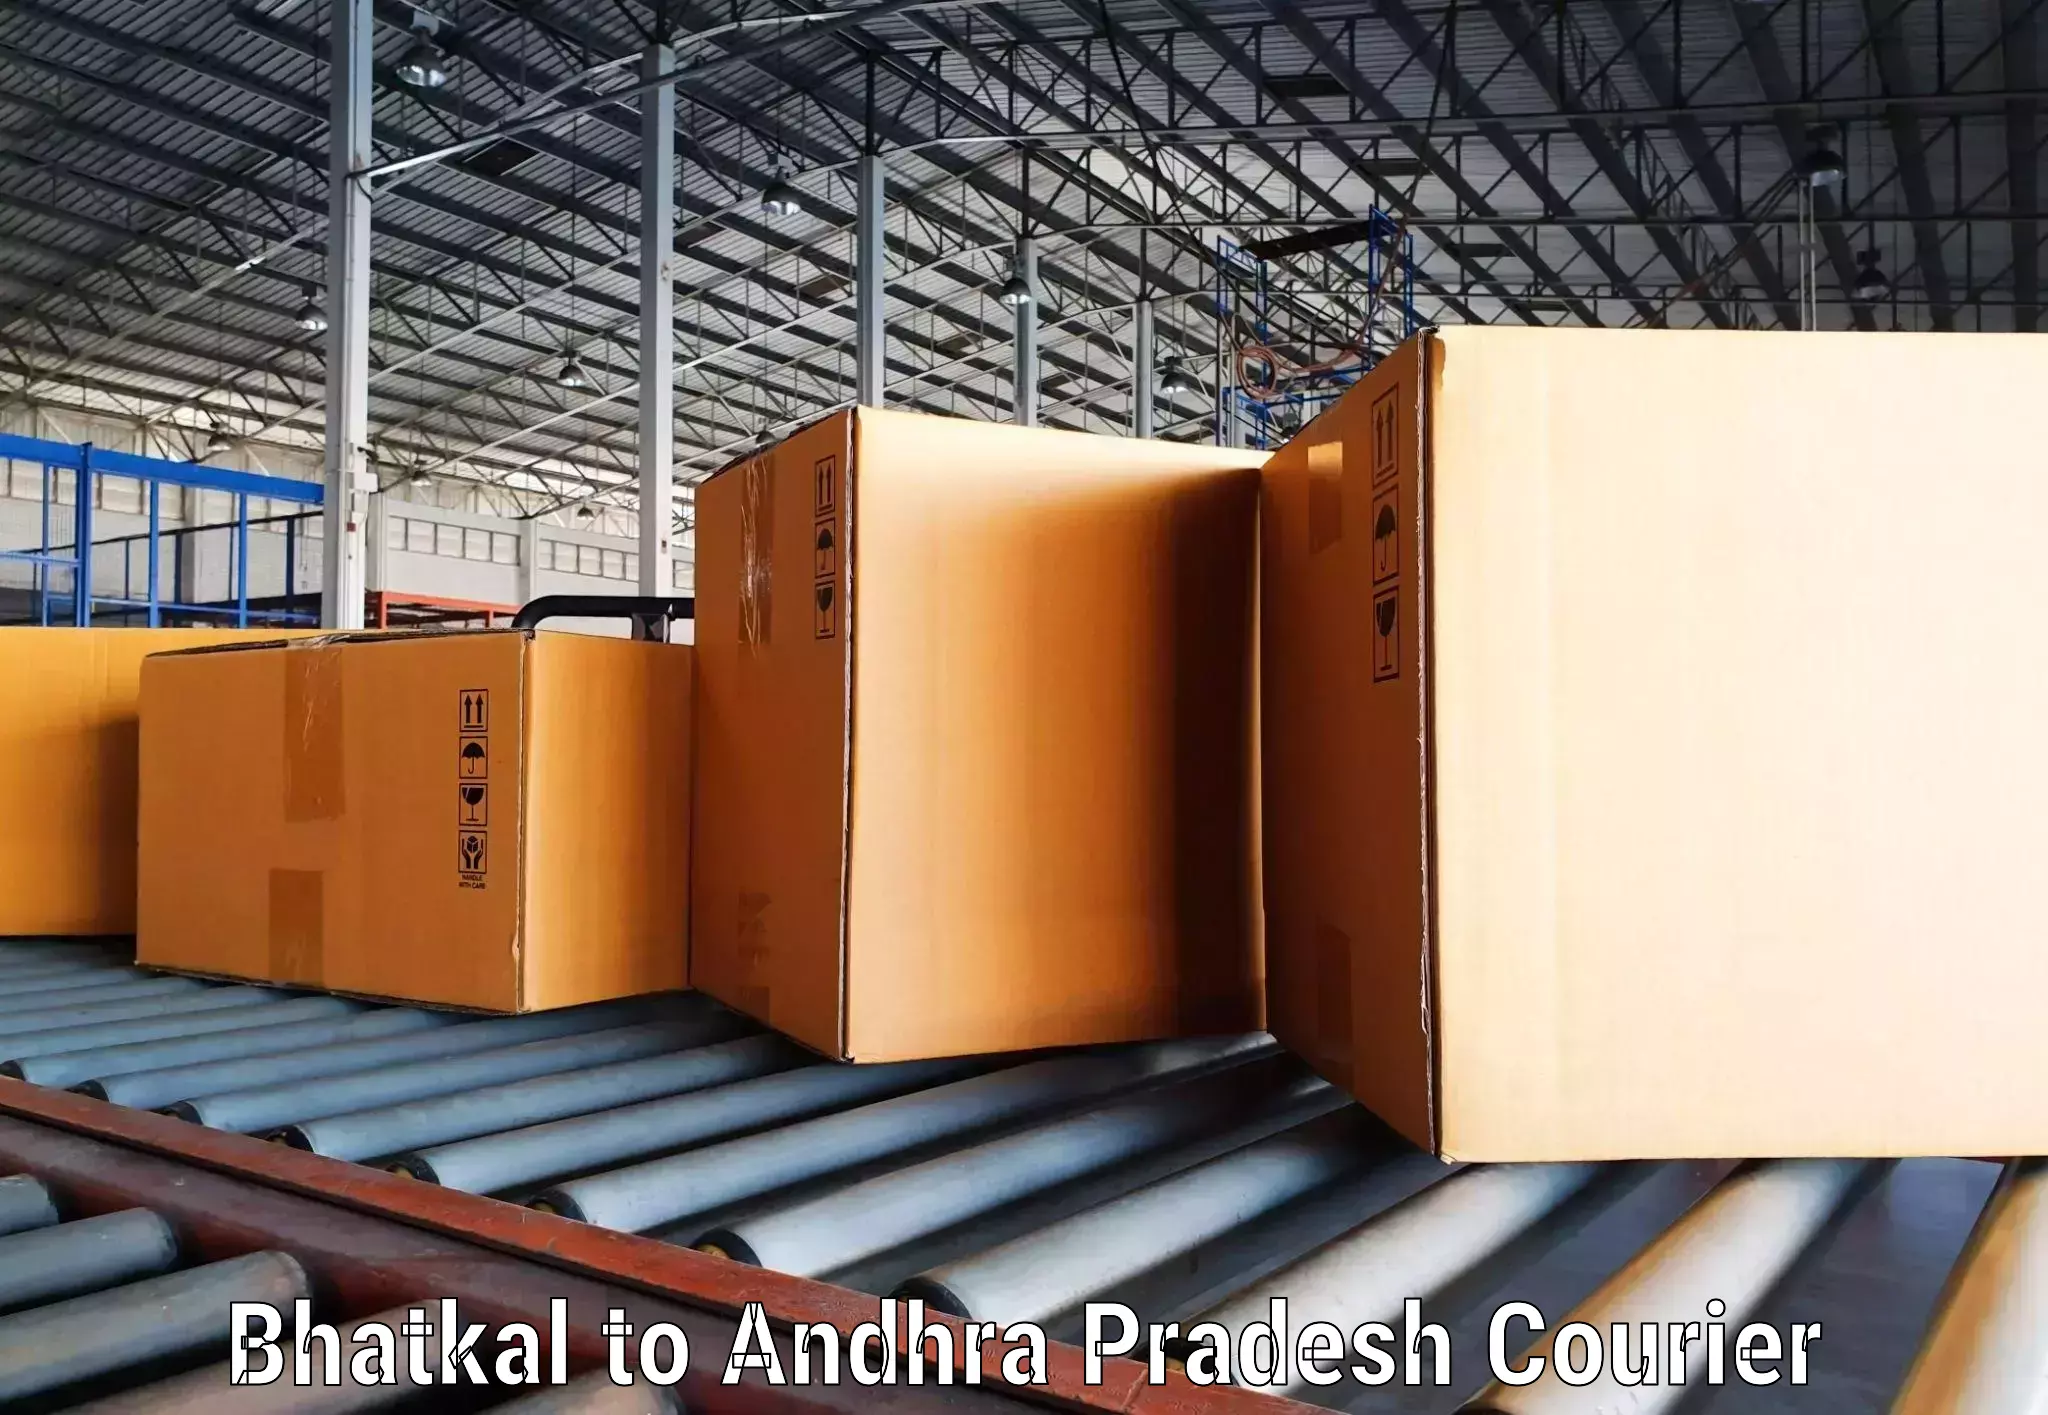 Global logistics network Bhatkal to Challapalli